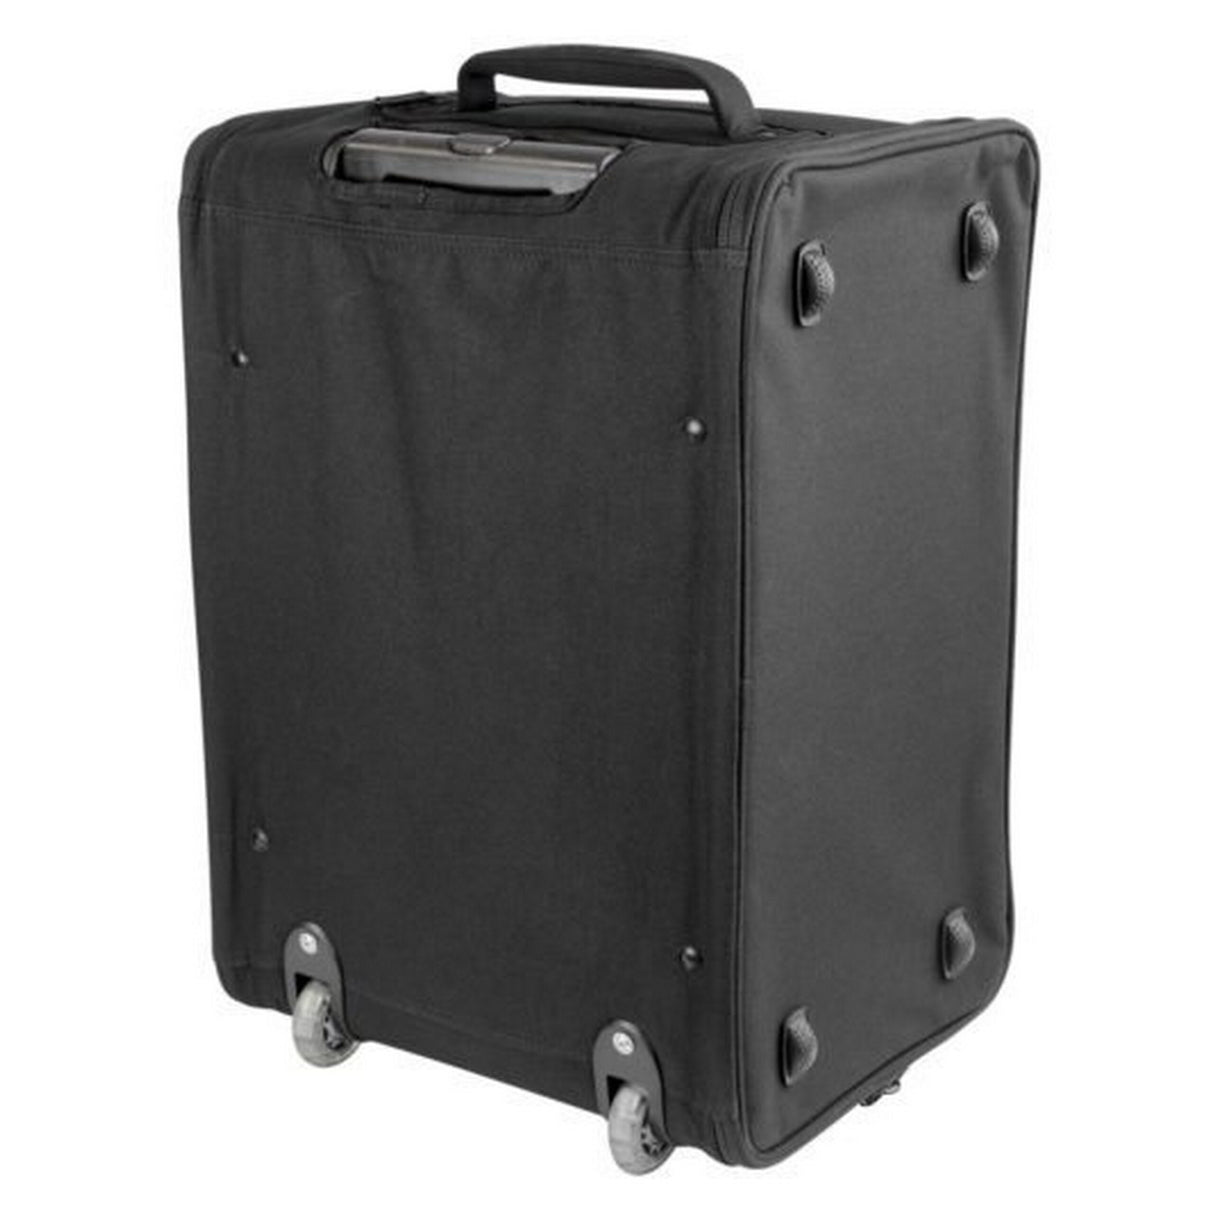 Gator Cases GR-RACKBAG-4UW 4U Lightweight Rack Bag with Tow Handle And Wheels